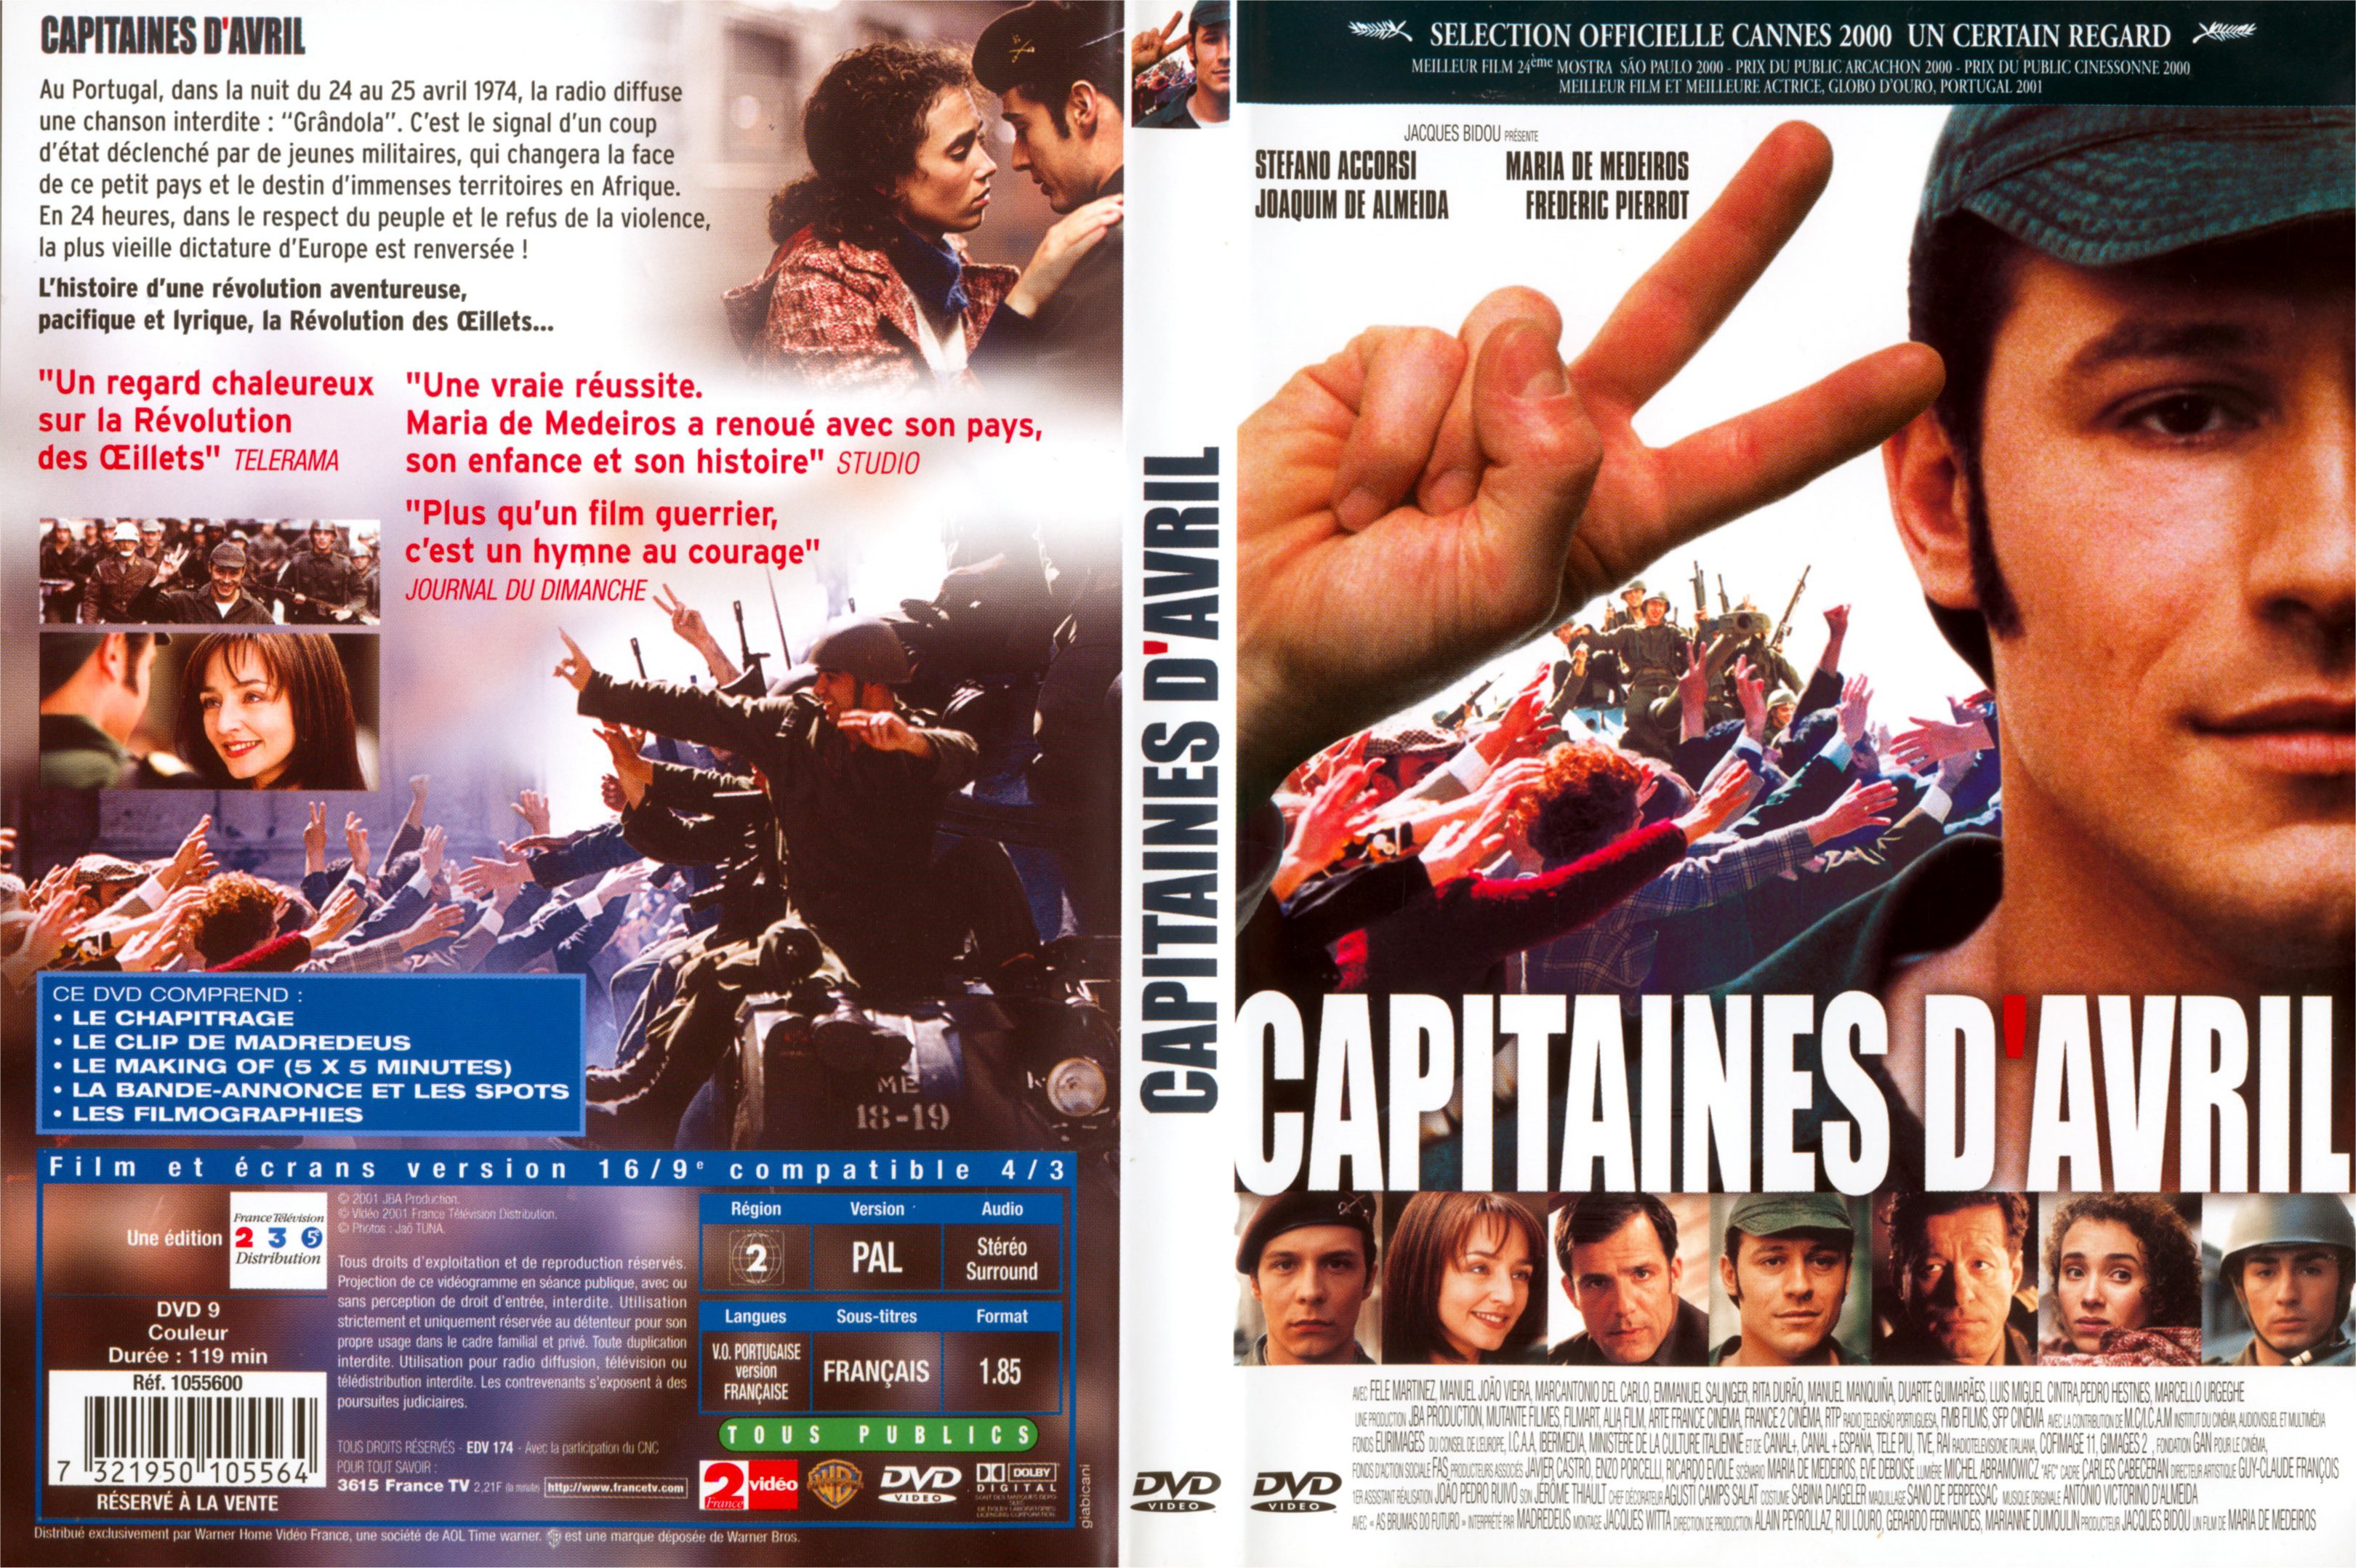 Jaquette DVD Capitaines d